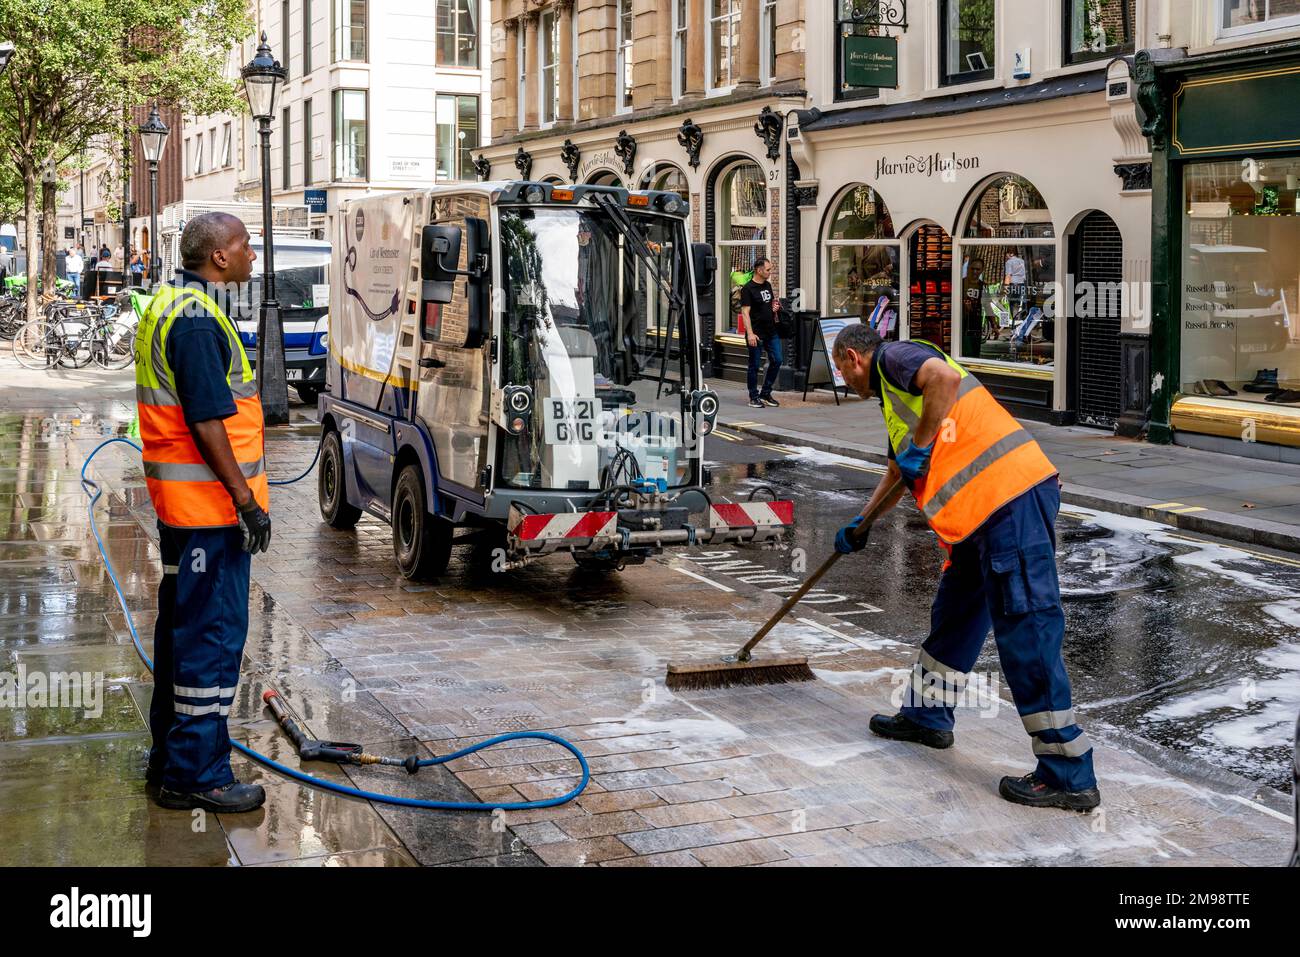 Street Cleaners, Jermyn Street, London, Uk. Stock Photo